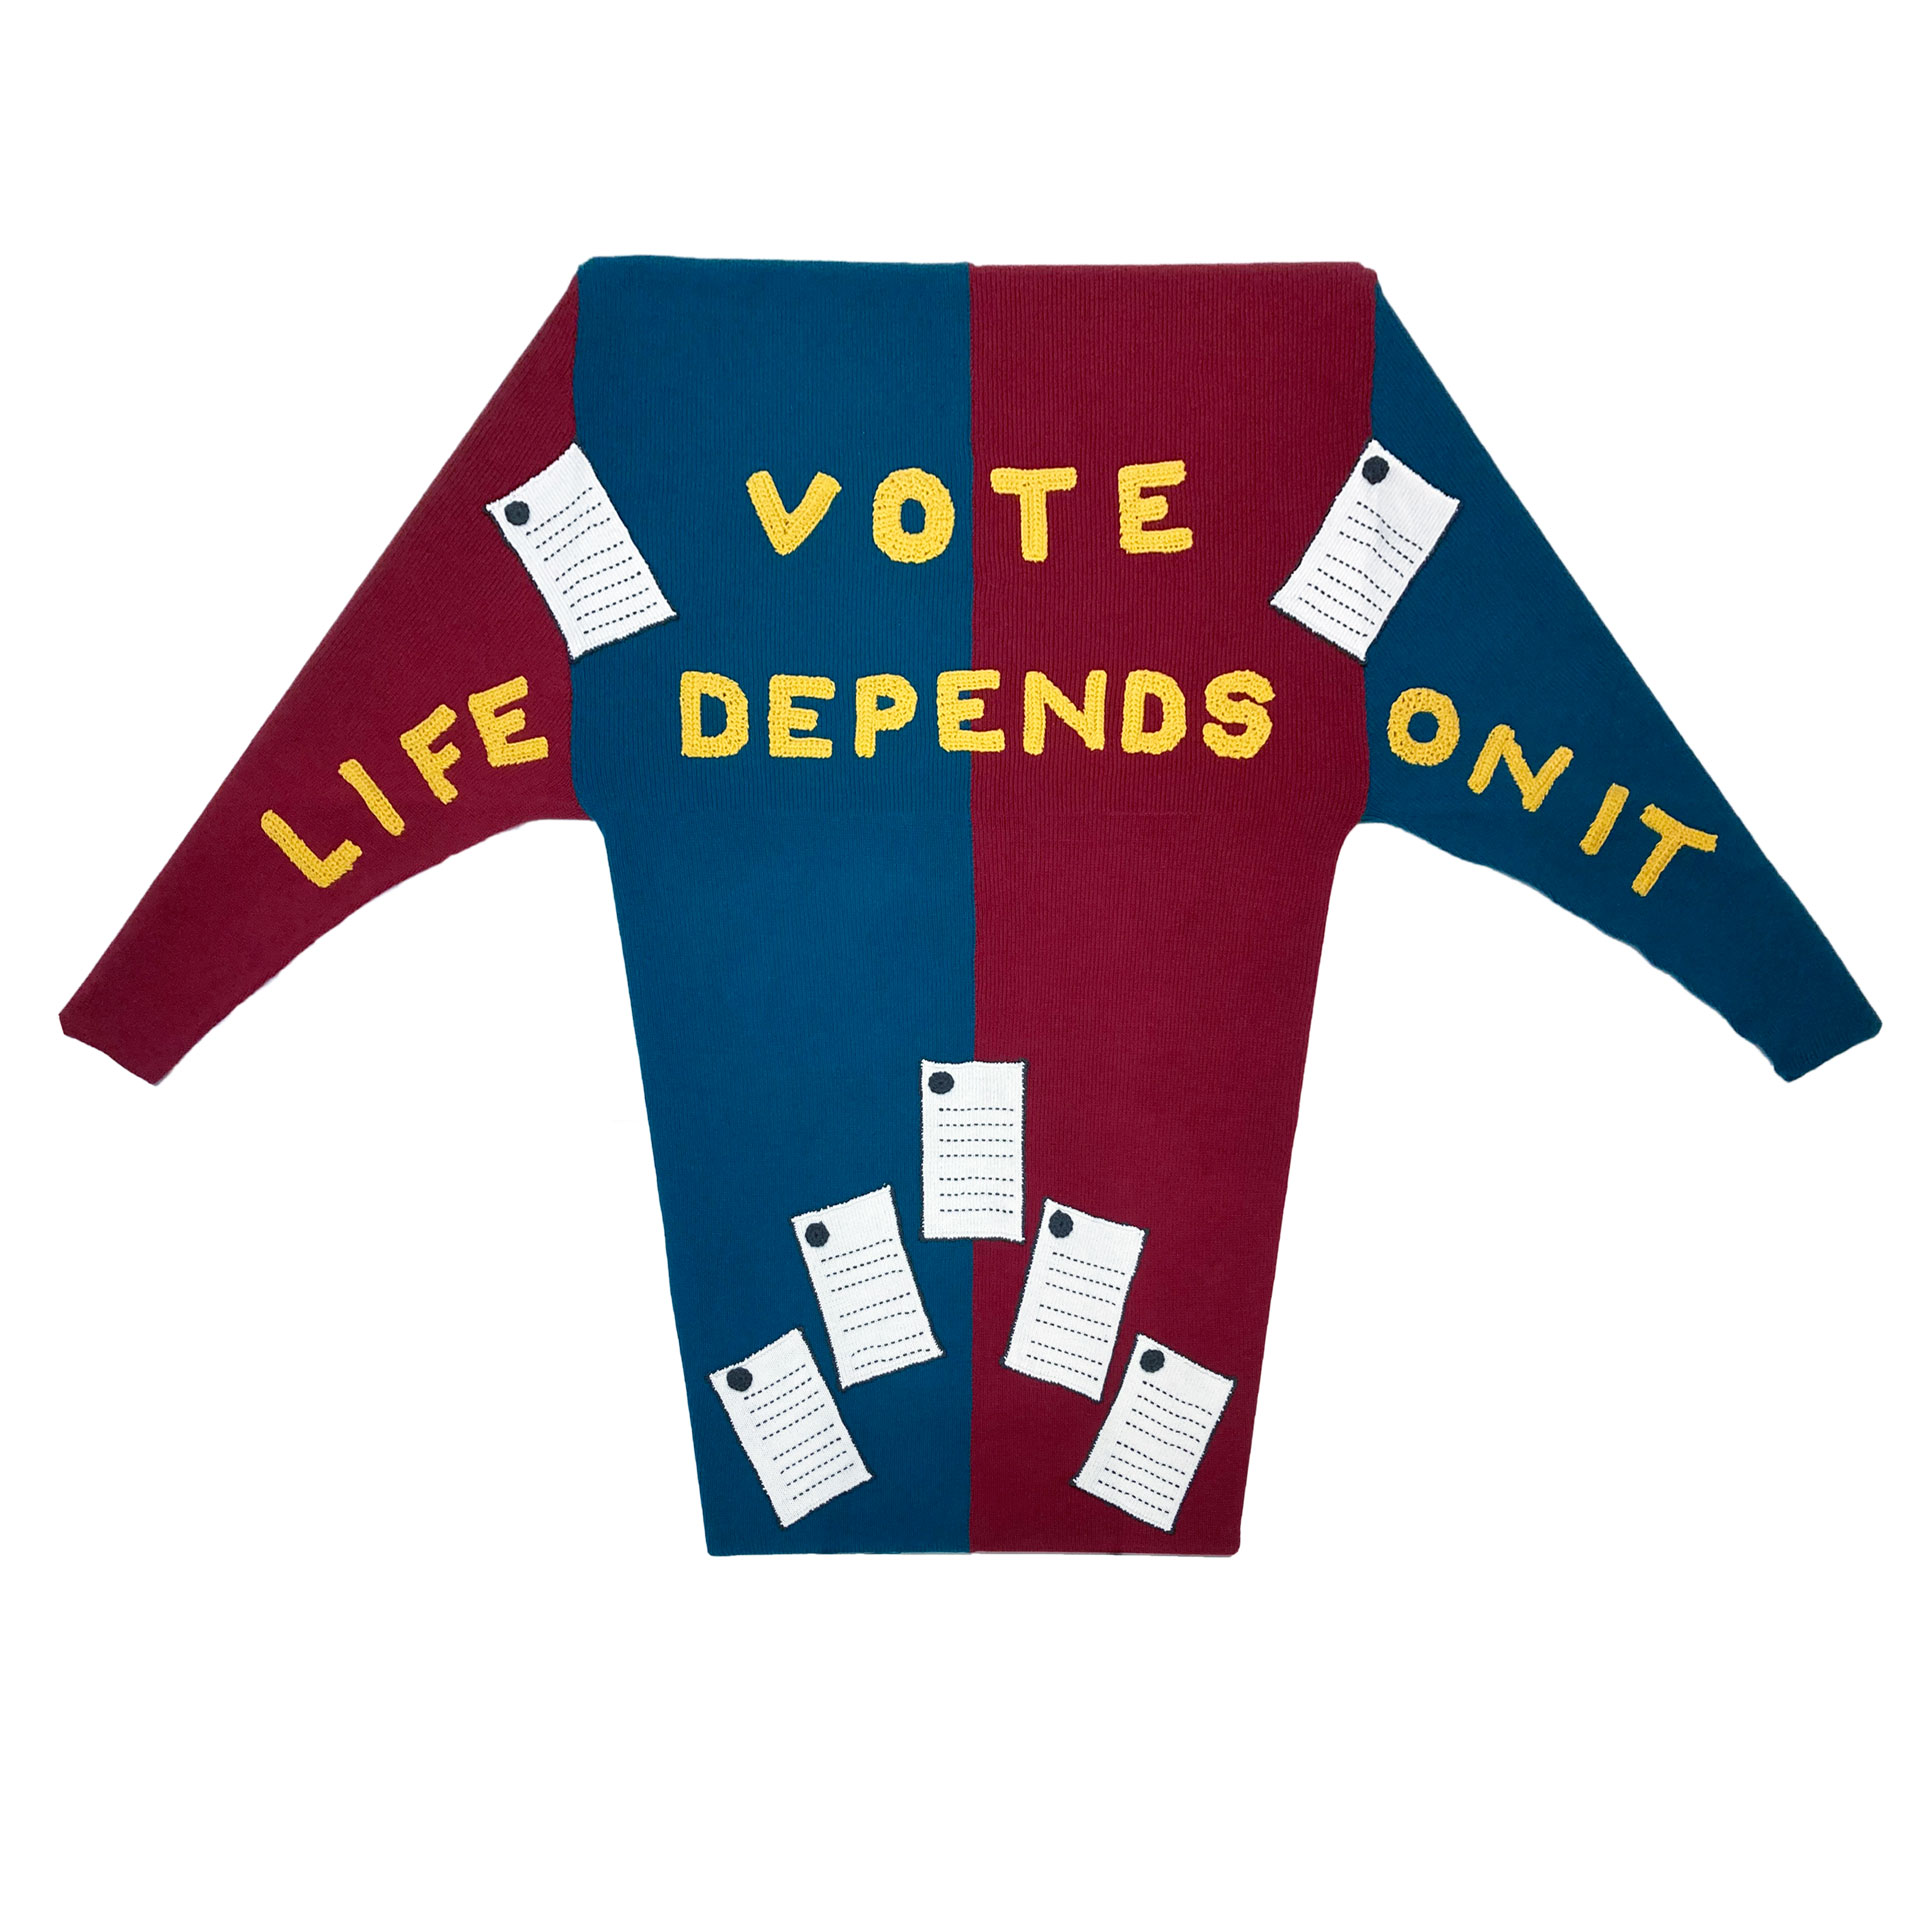 Vote: Life Depends On It by Darlyn Susan Yee